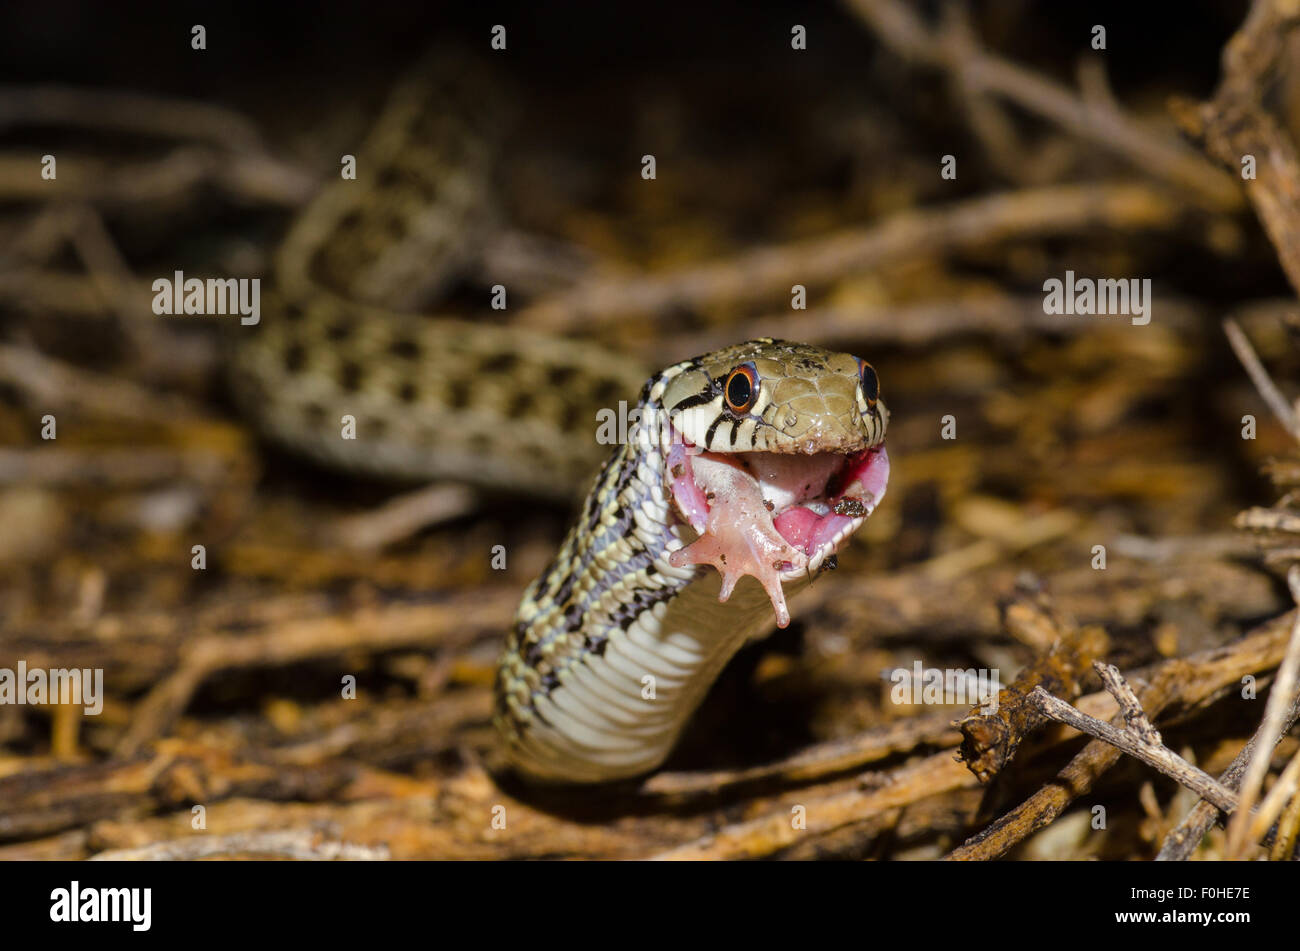 Giarrettiera a scacchi Snake, (thamnophis marcianus marcianus), mangiando un deserto del Chihuahuan Spadefoot, (Spea multiplicata stagnalis). Foto Stock